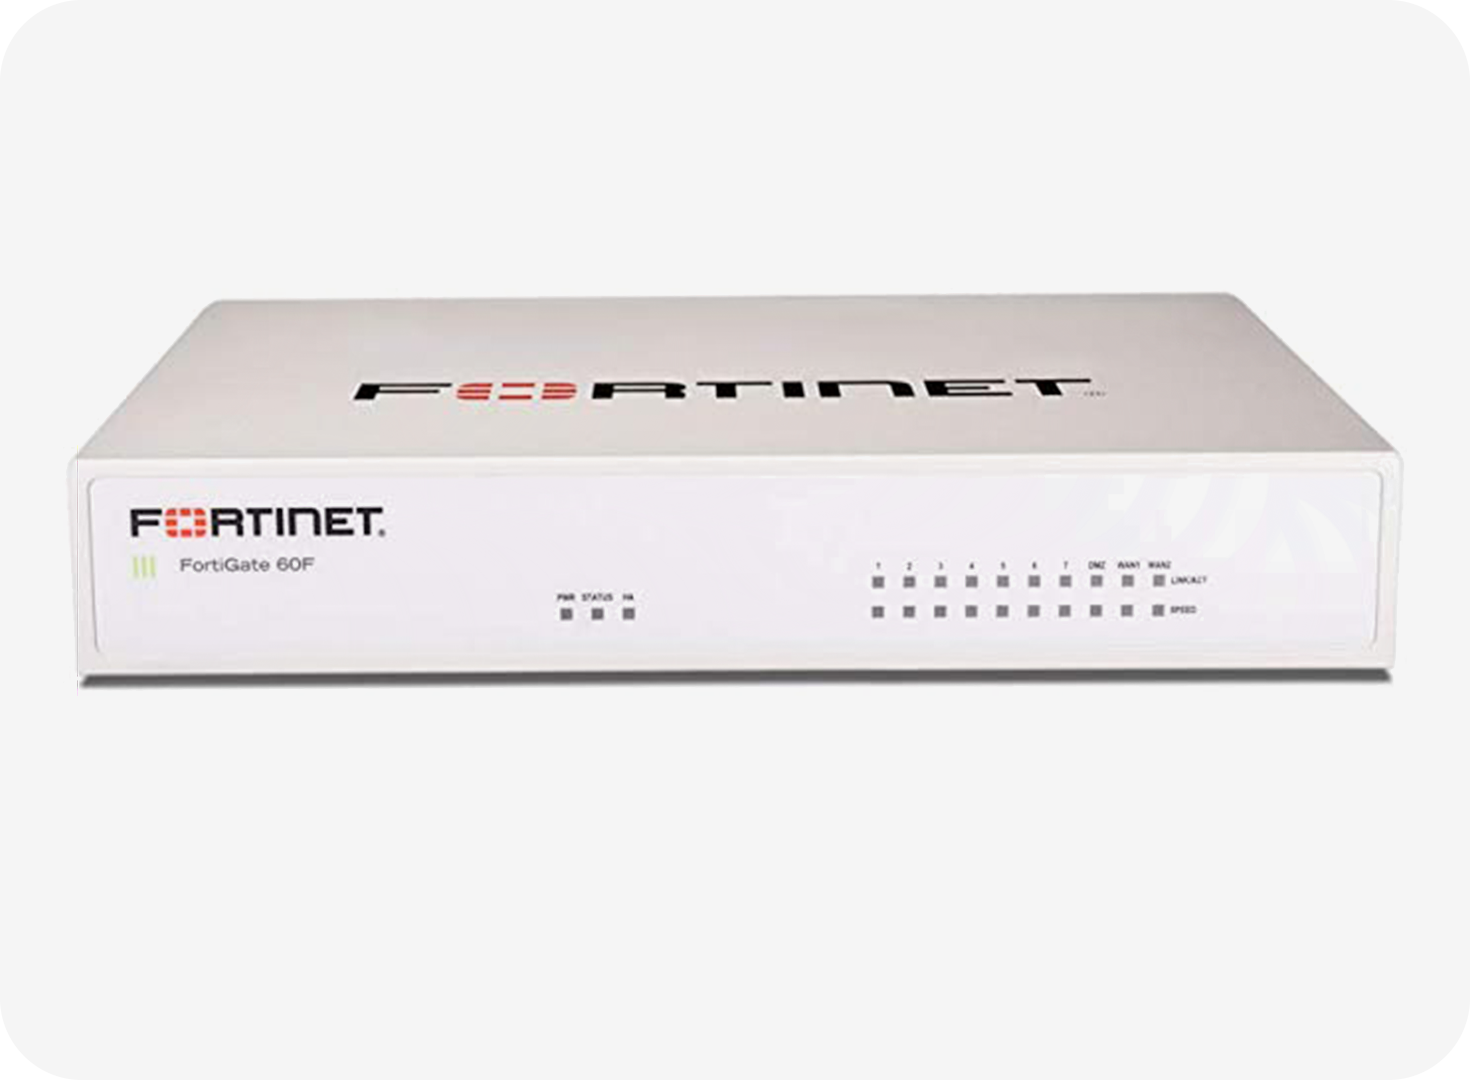 Buy FortiGate 60F Firewall at Best Price in Dubai, Abu Dhabi, UAE